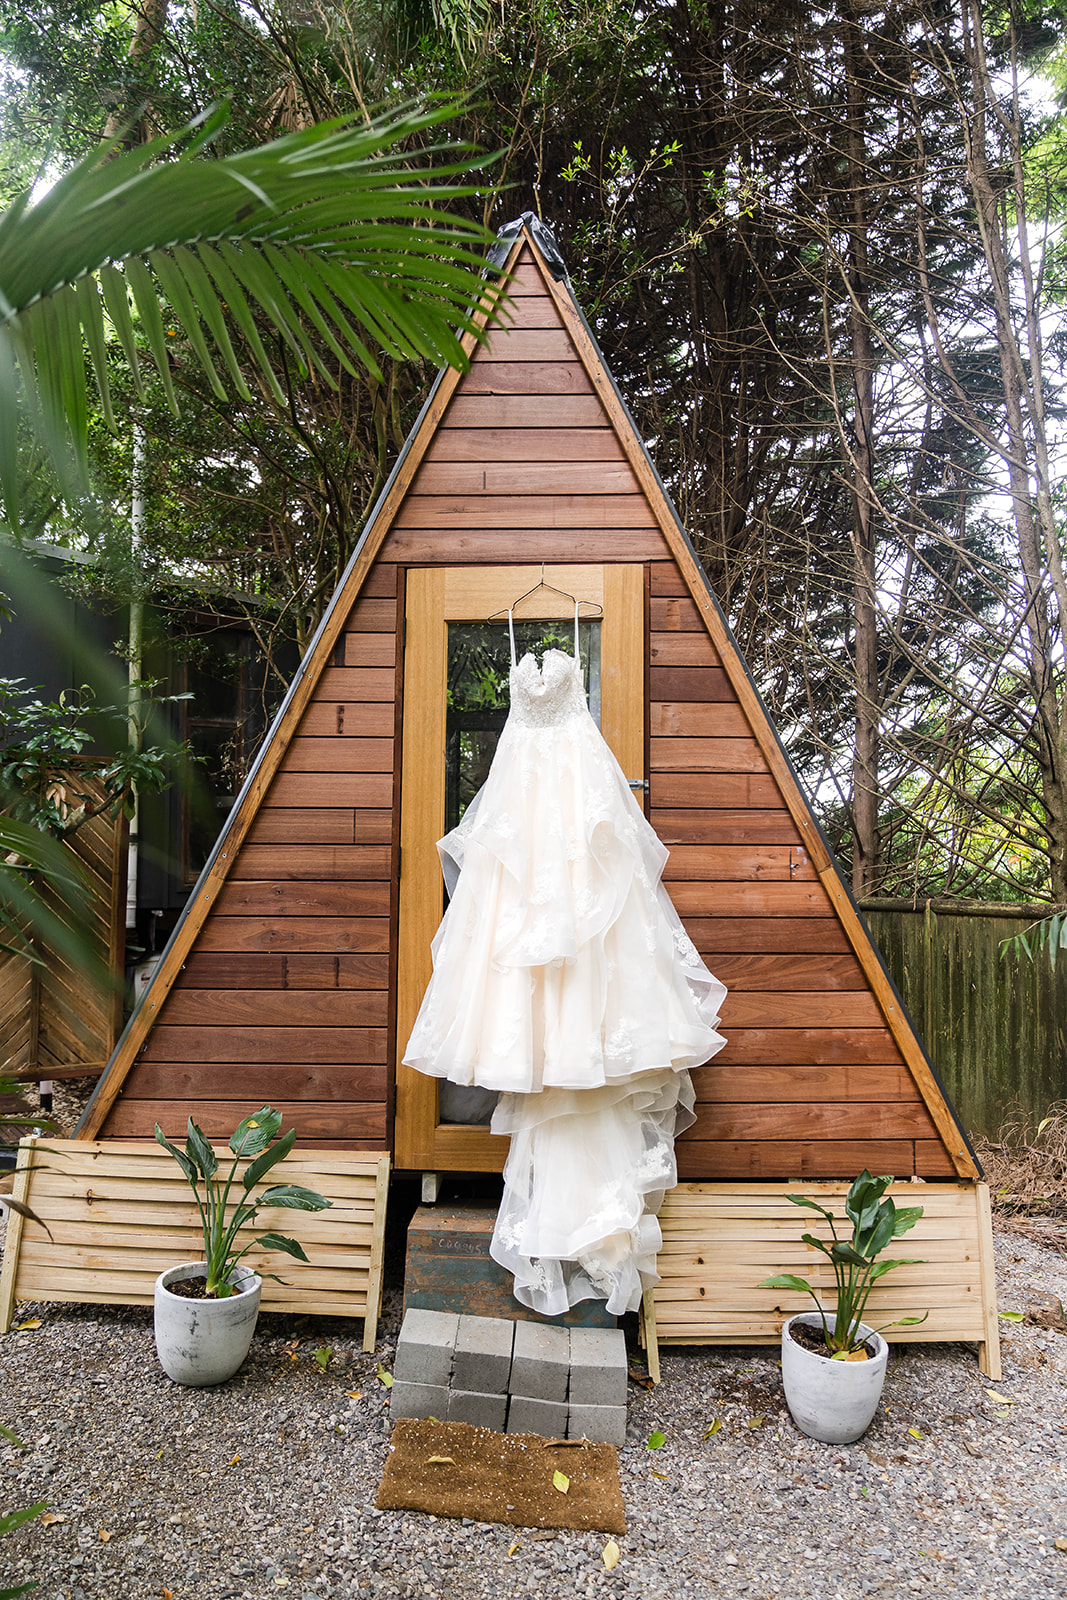 Bride dress hanging on outdoor cabin.